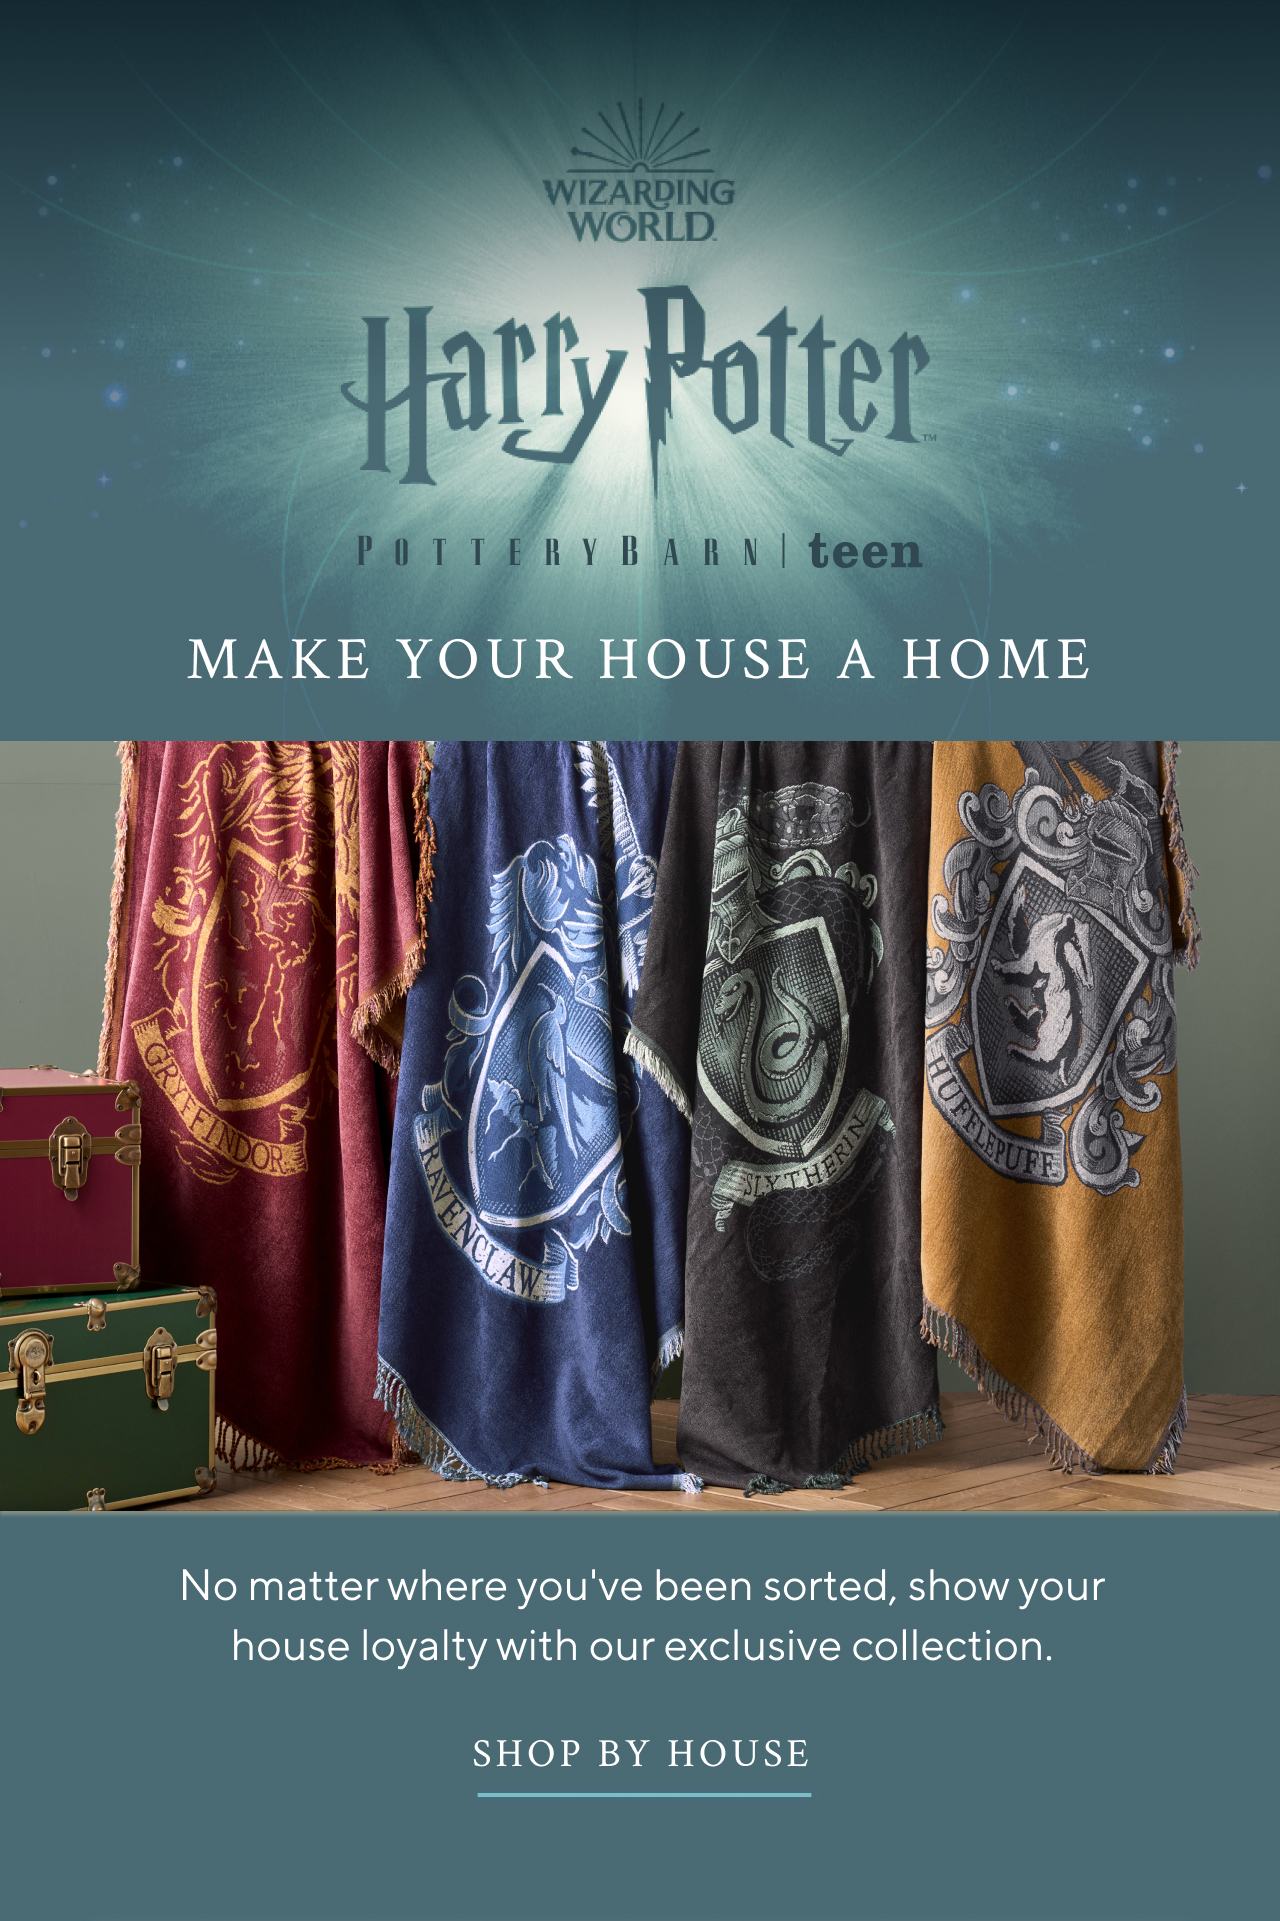 Harry Potter. Shop by House